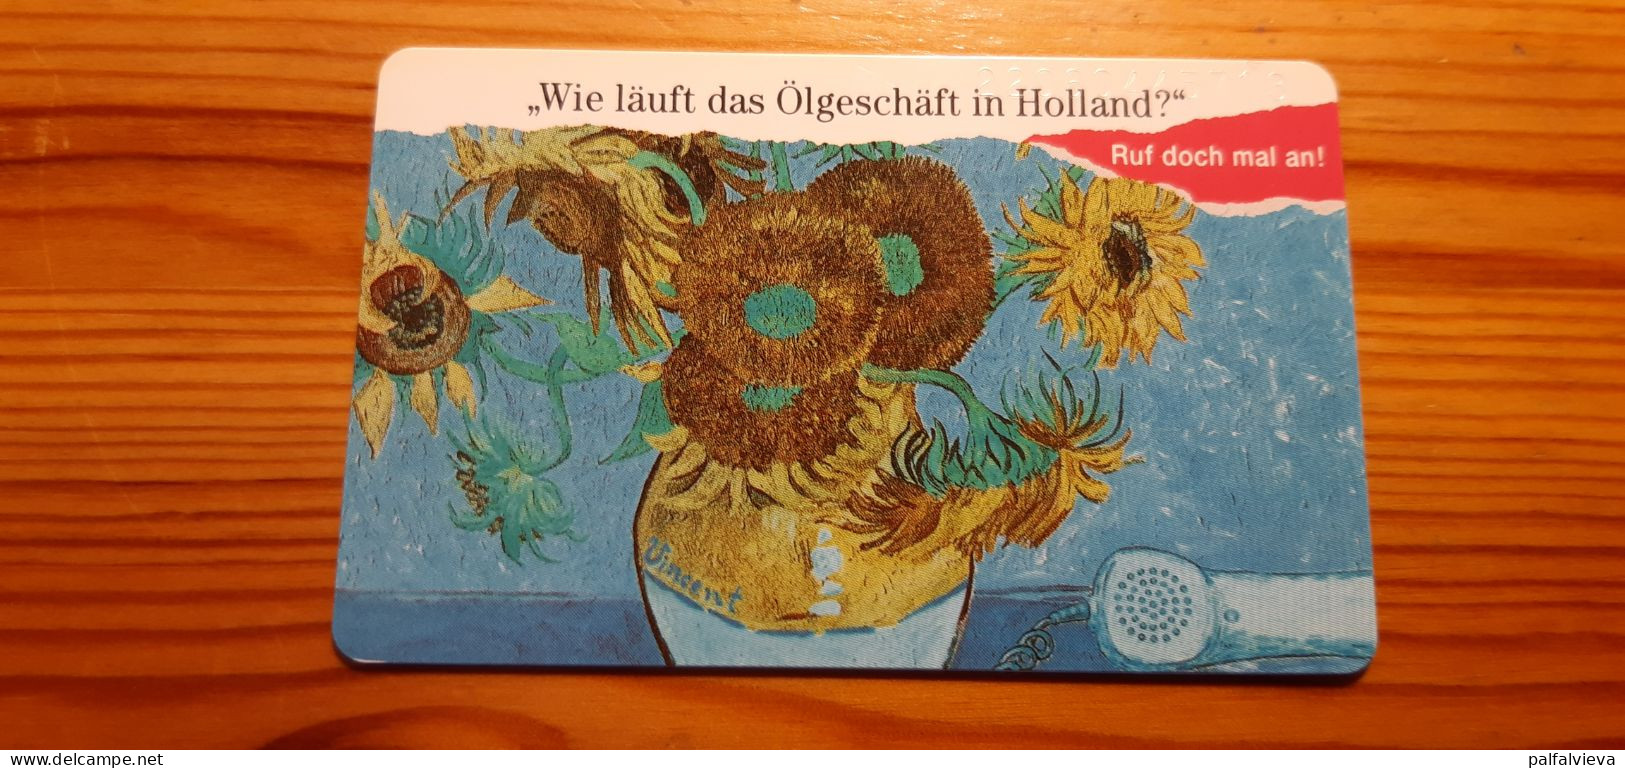 Phonecard Germany A 37 C 11.91. 2. Aufl. Painting, Van Gogh 40.000 Ex - A + AD-Series : D. Telekom AG Advertisement